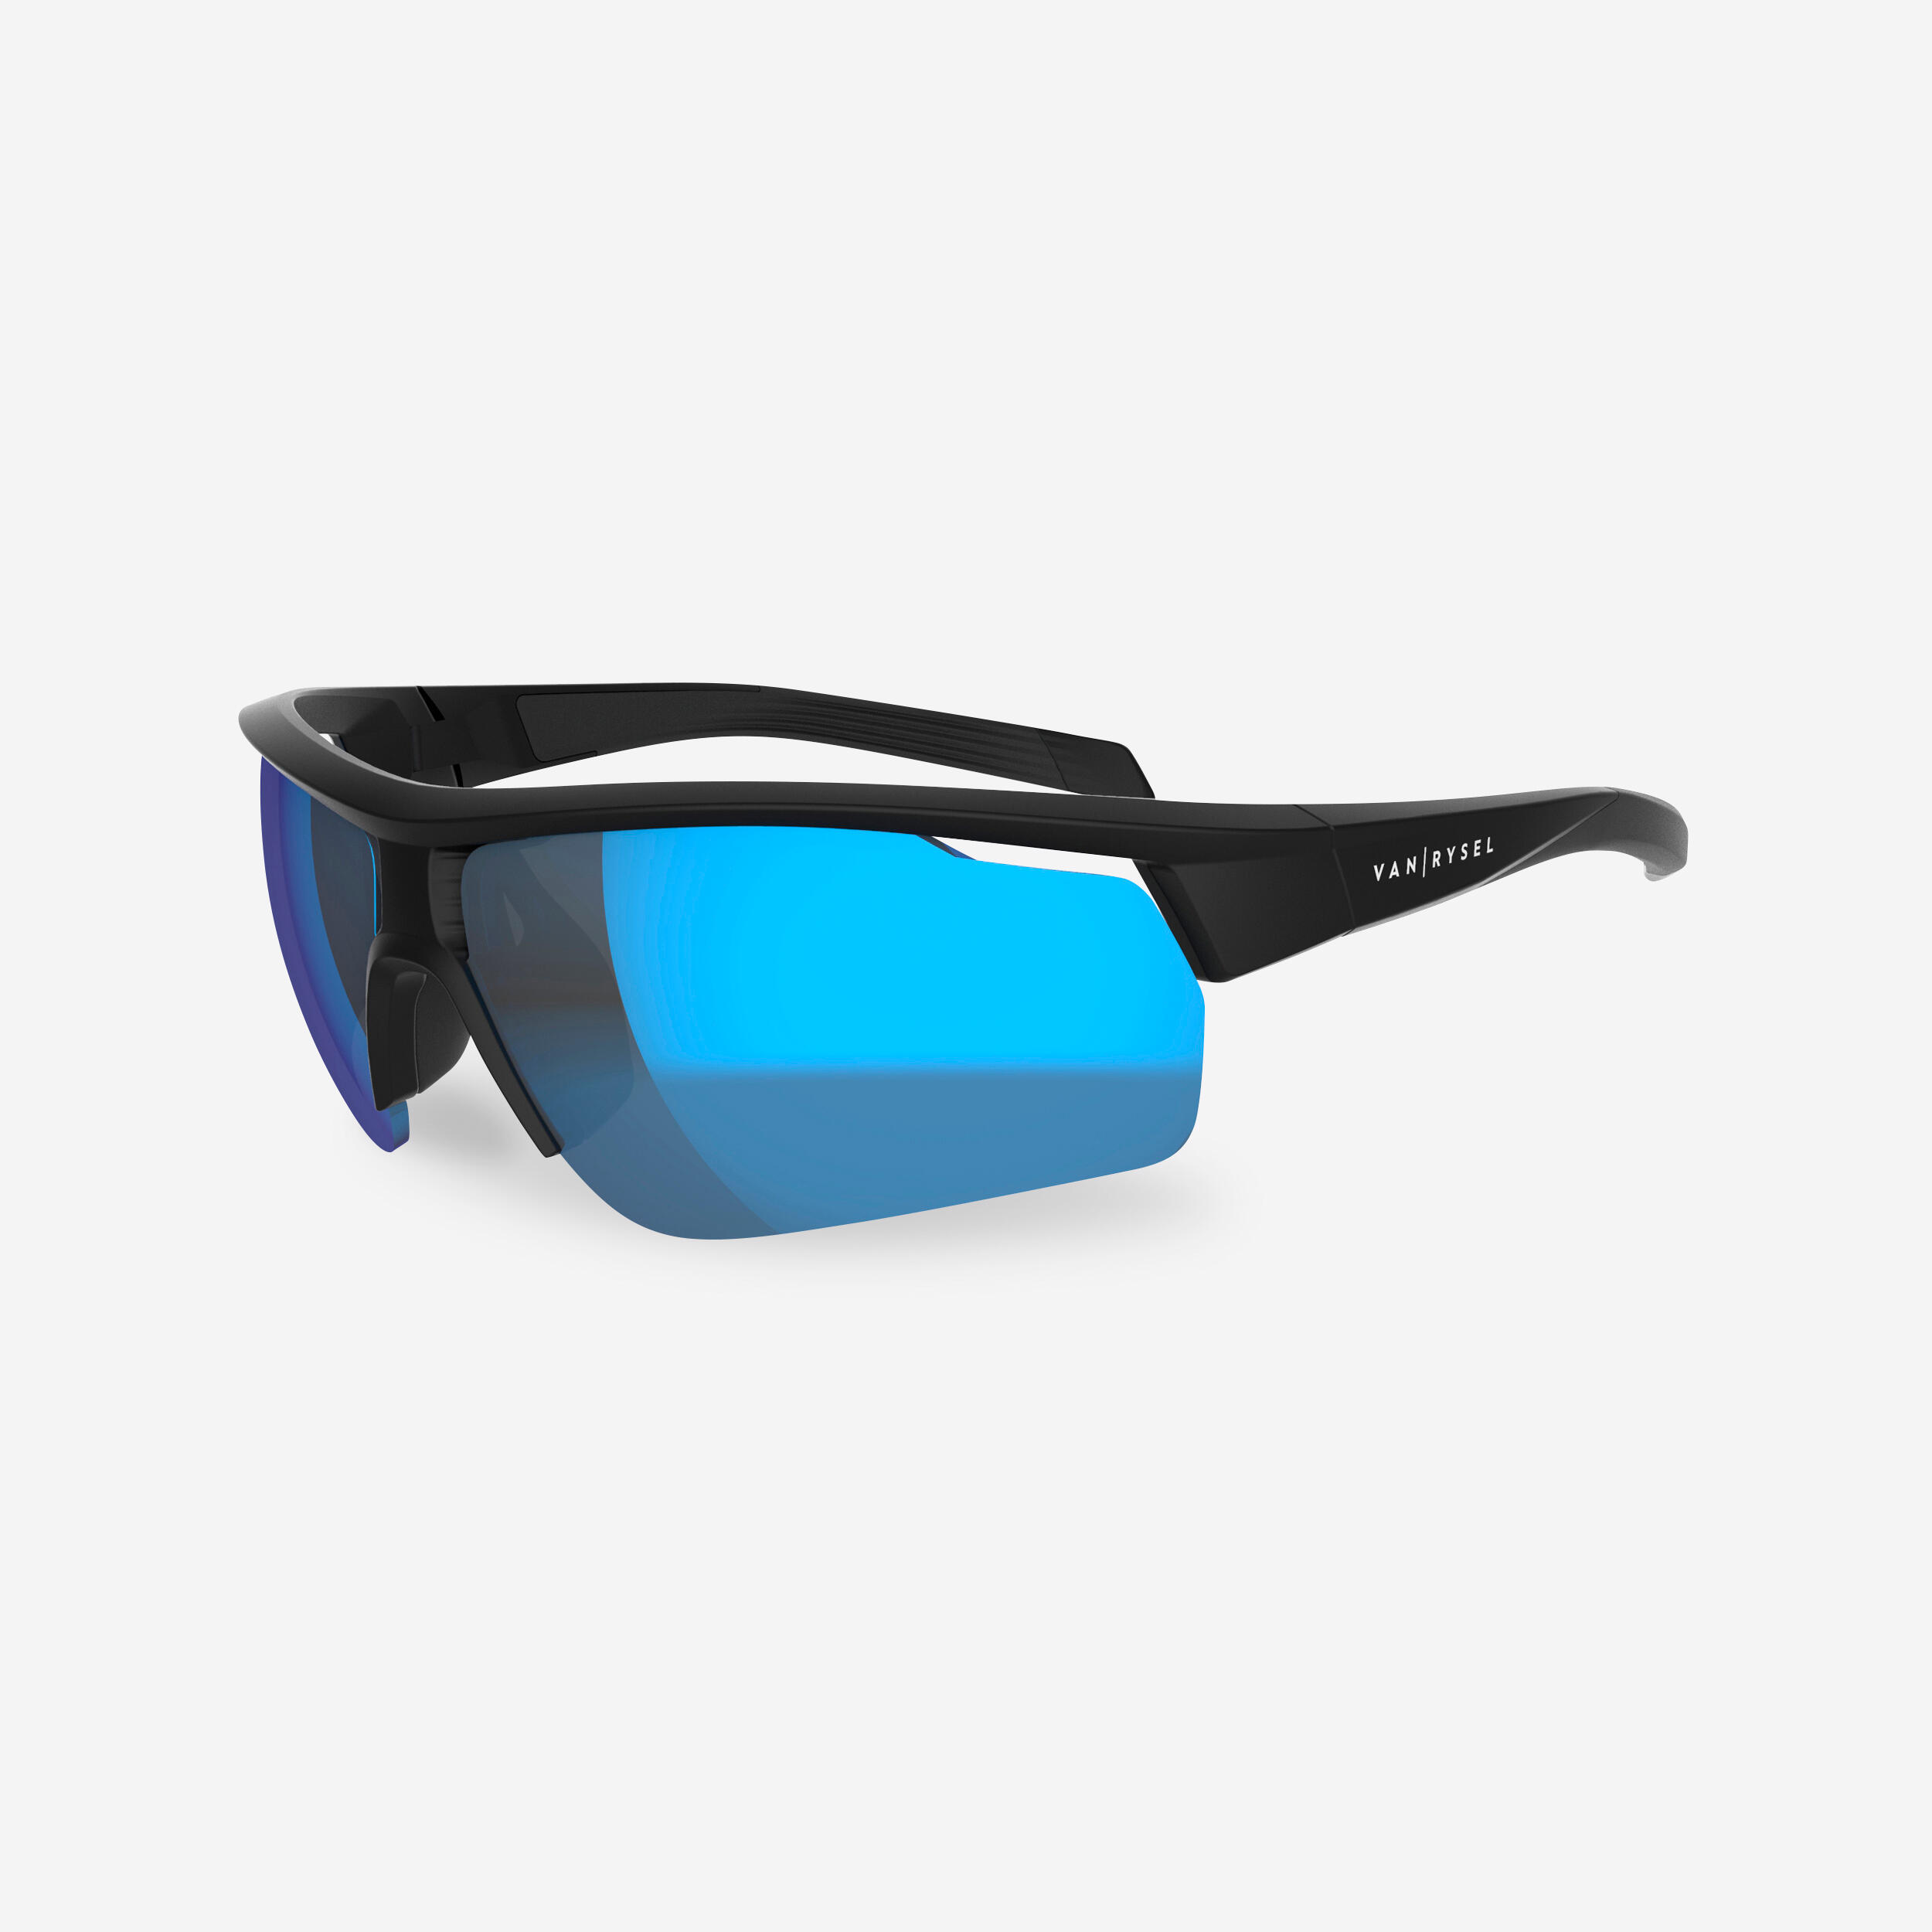 Qoo10 - Outdoor sunglasses bicycle Decathlon anti-sand mountain bike riding  gl... : Sports Equipment